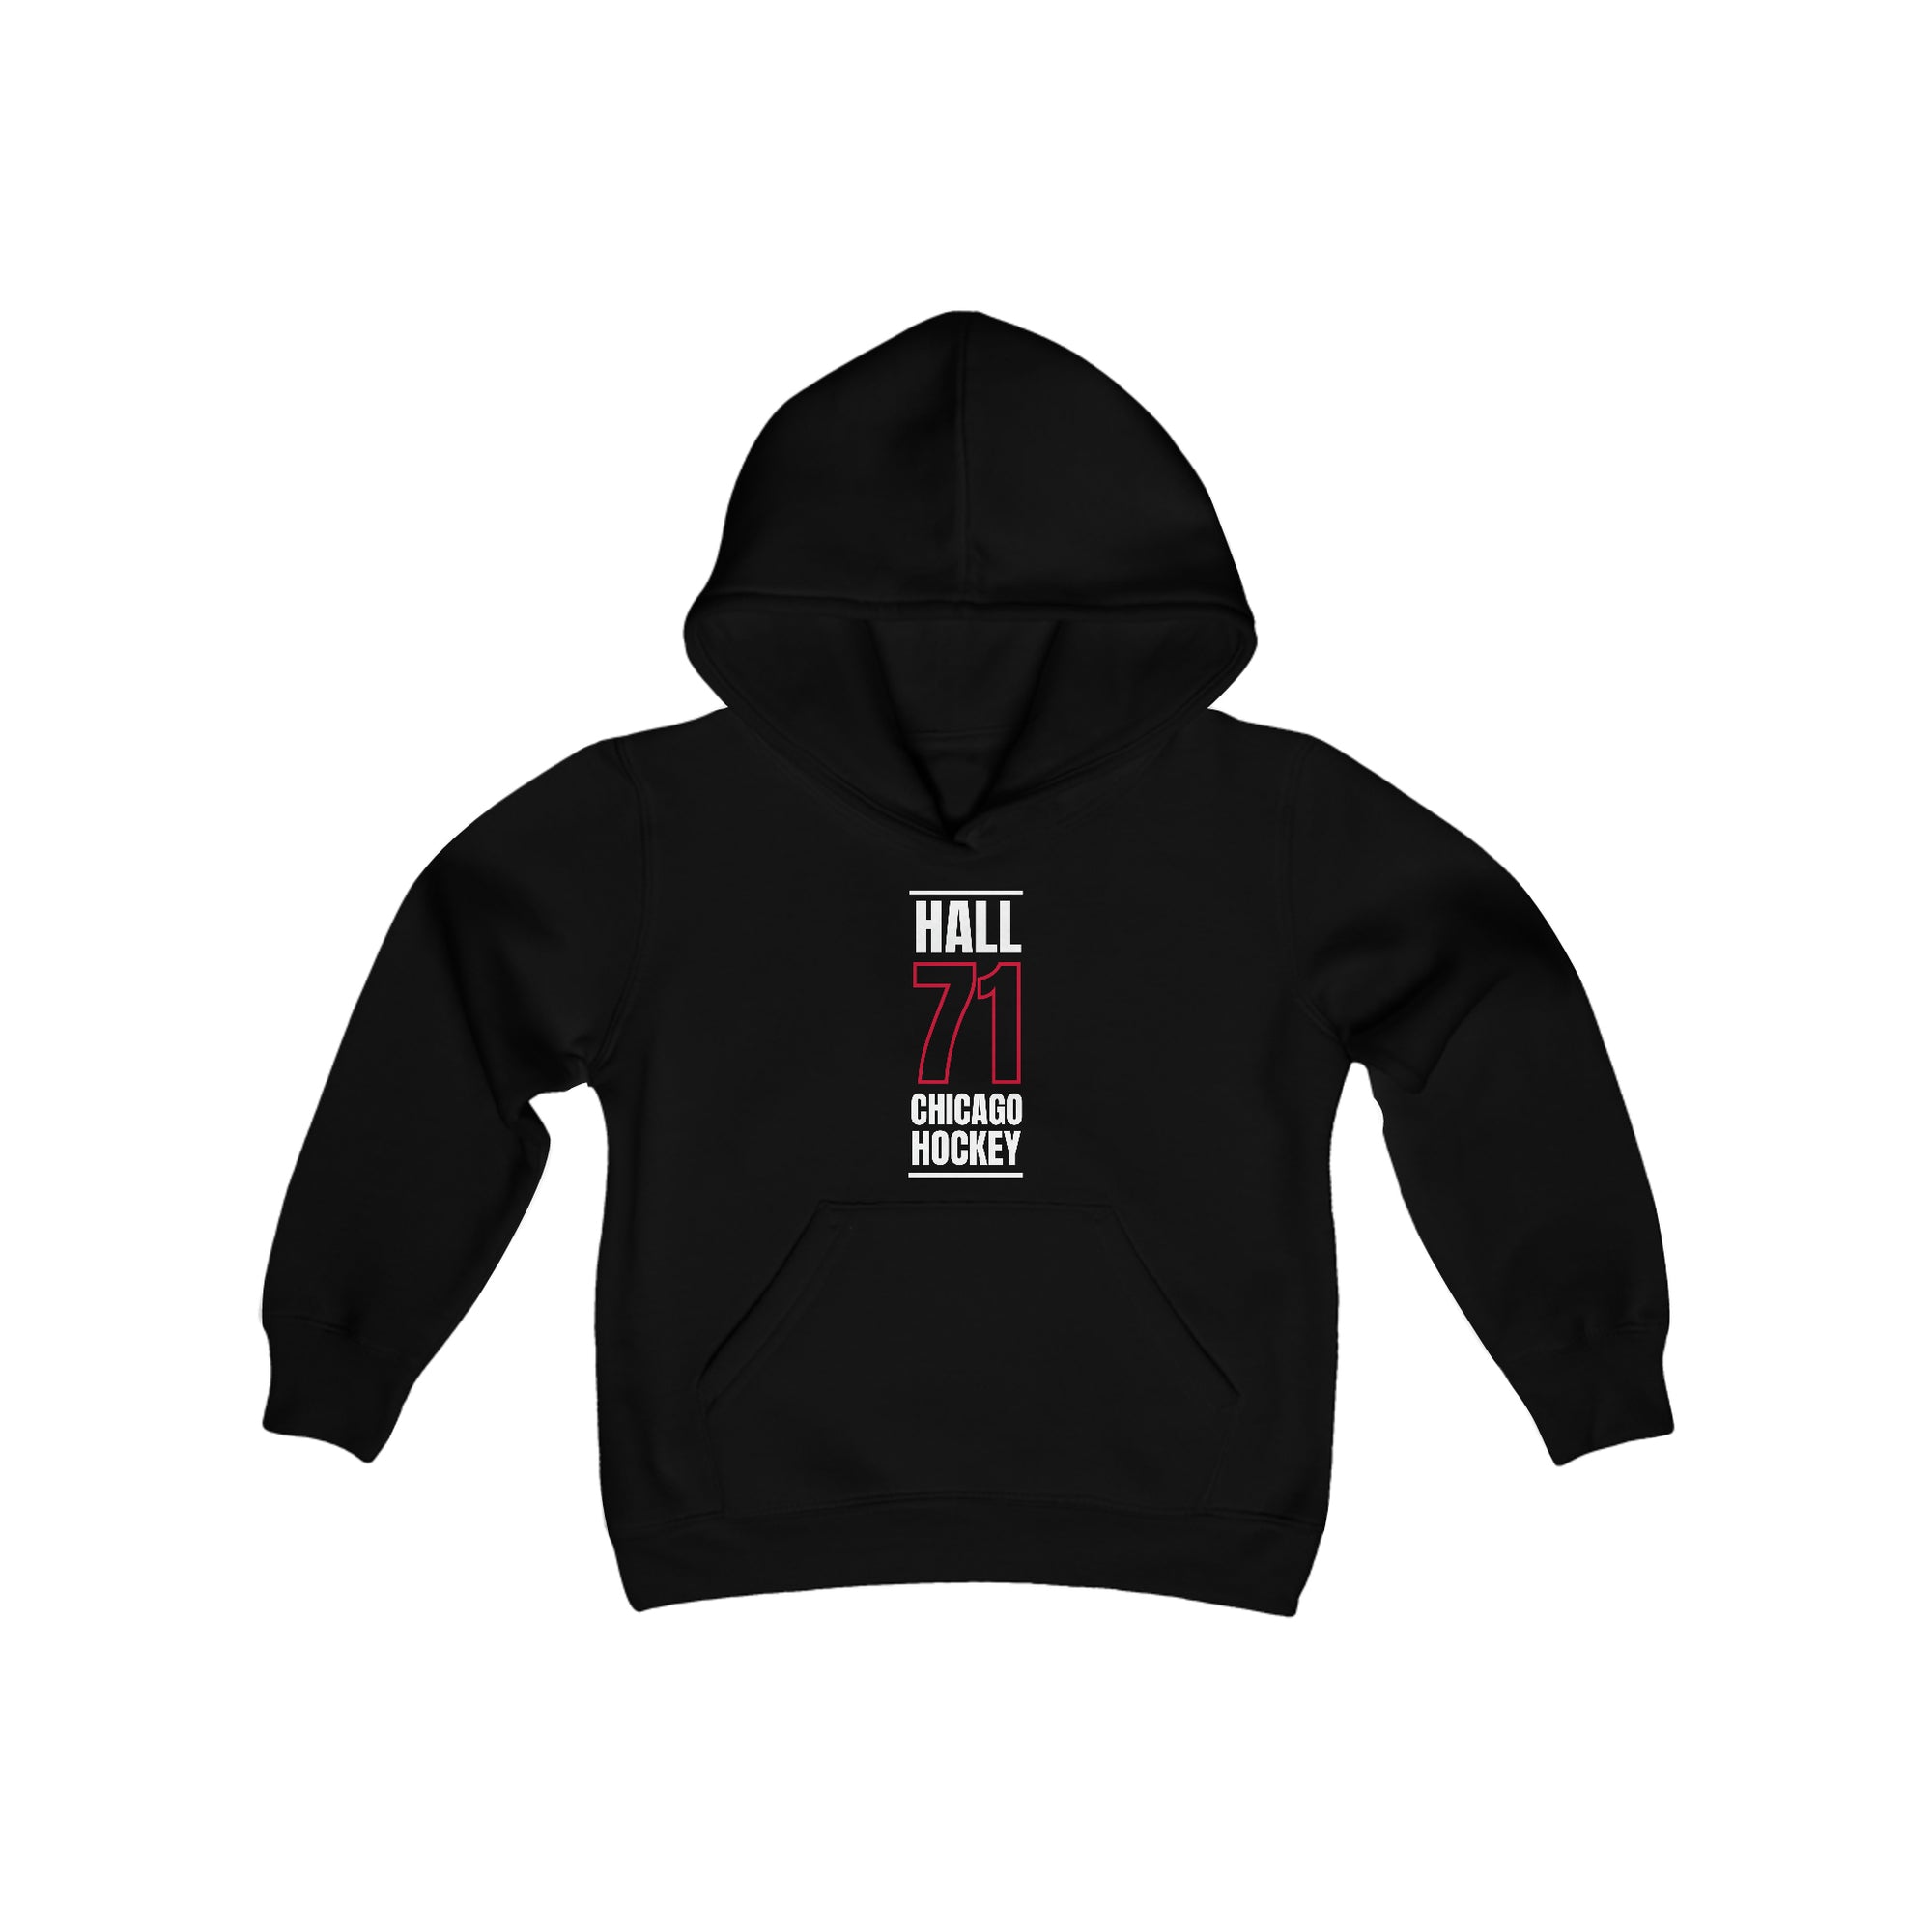 Hall 71 Chicago Hockey Black Vertical Design Youth Hooded Sweatshirt